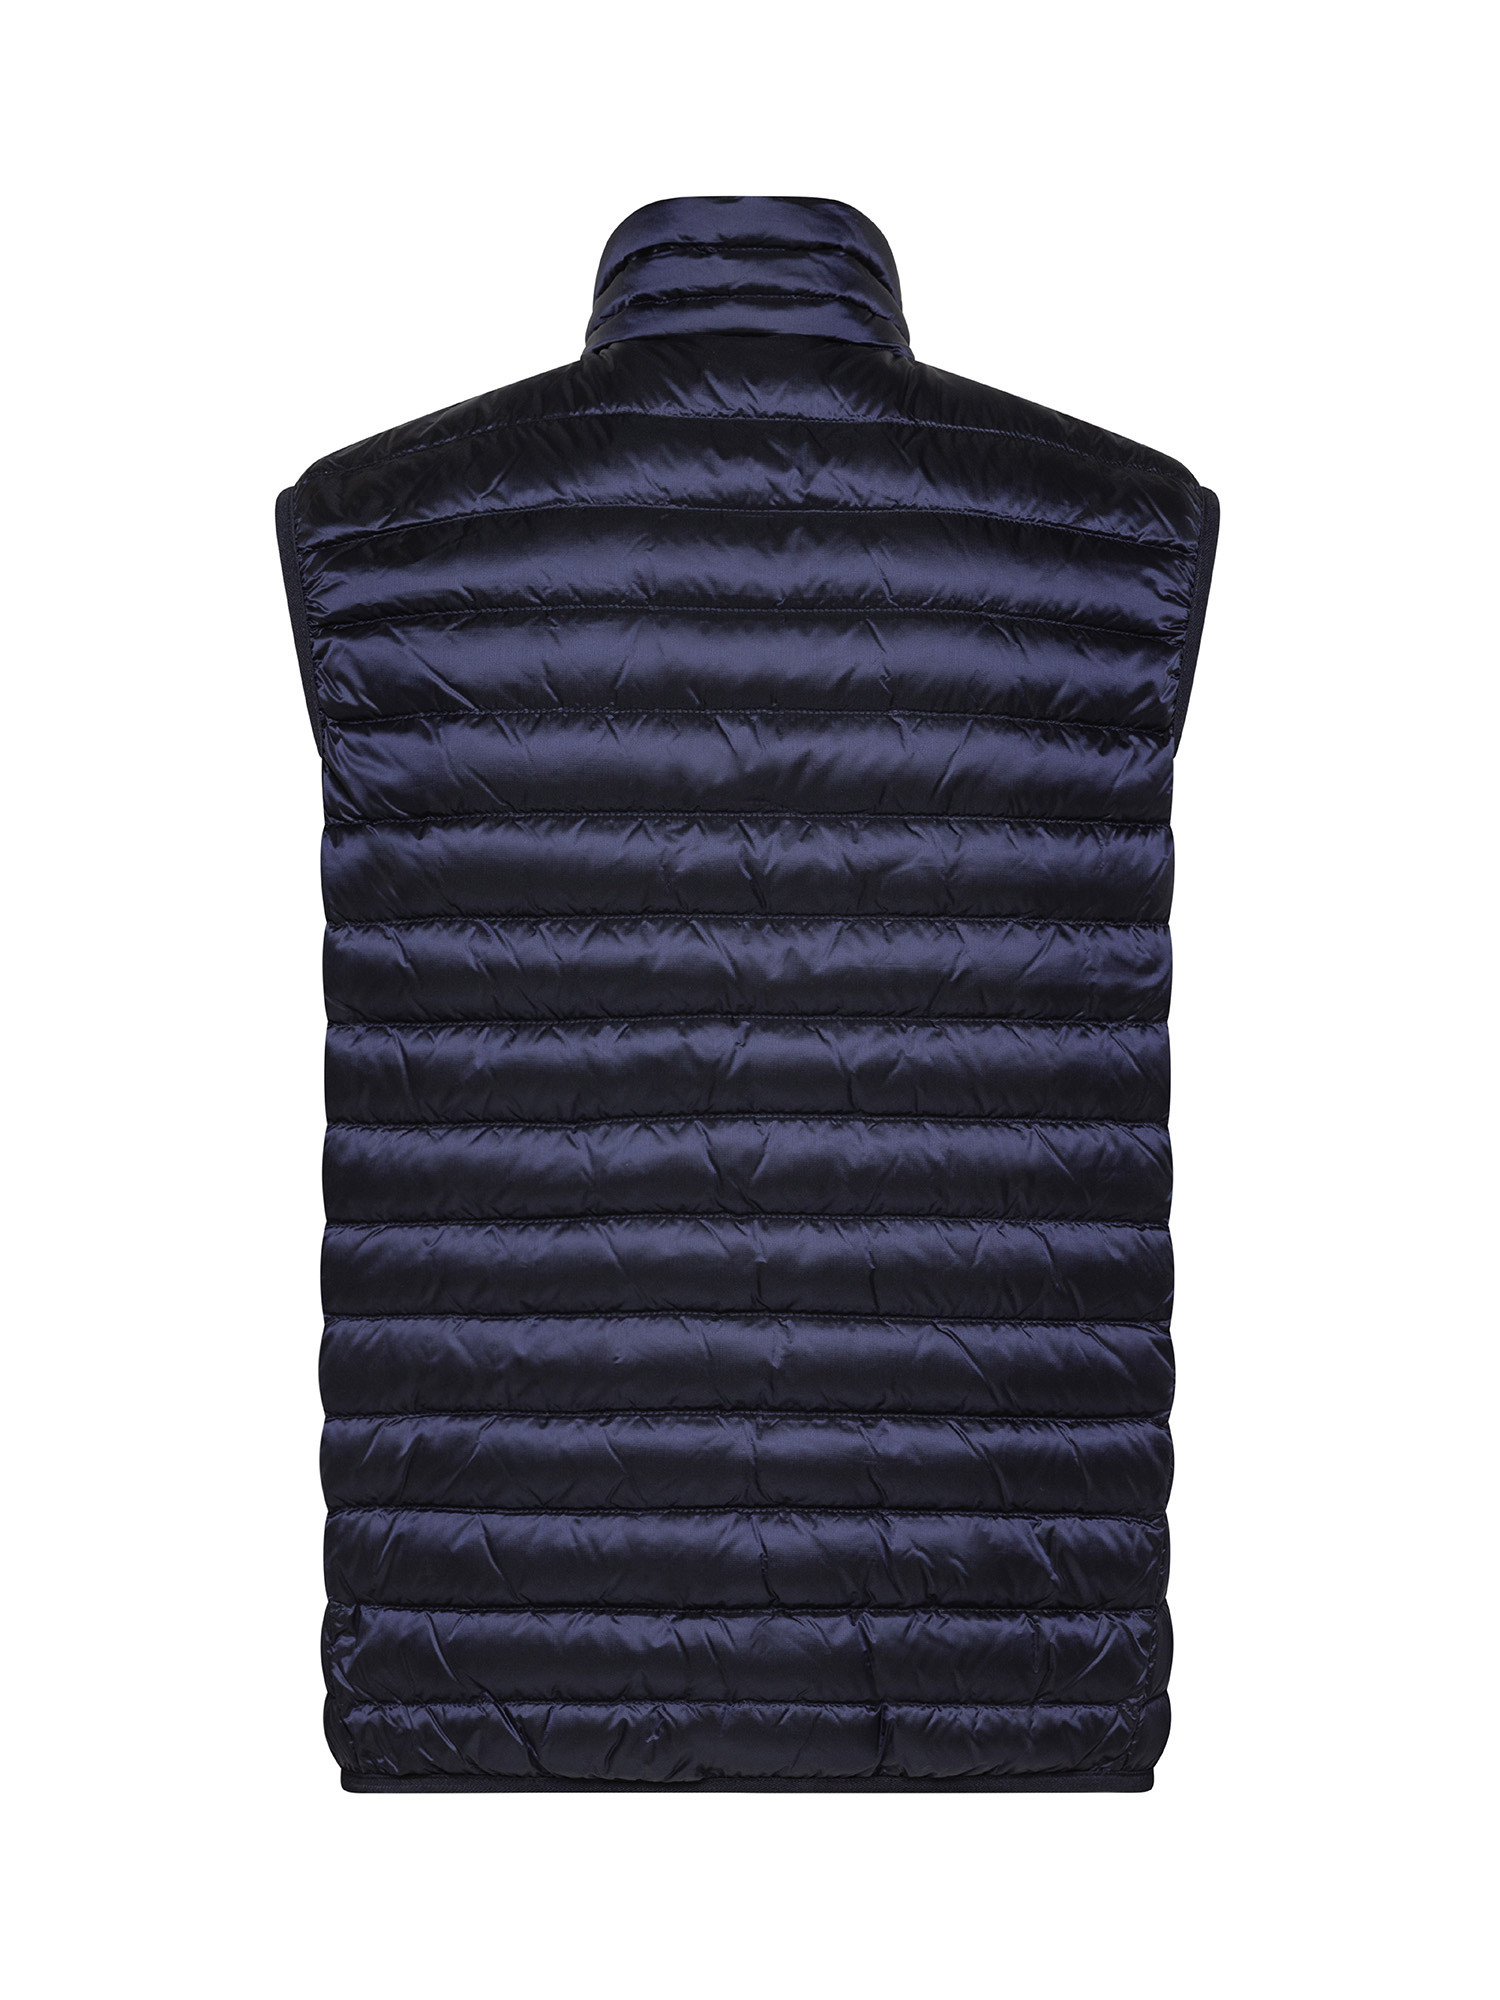 Ciesse Piumini - Gilet trapuntato full zip in nylon, Blu scuro, large image number 1